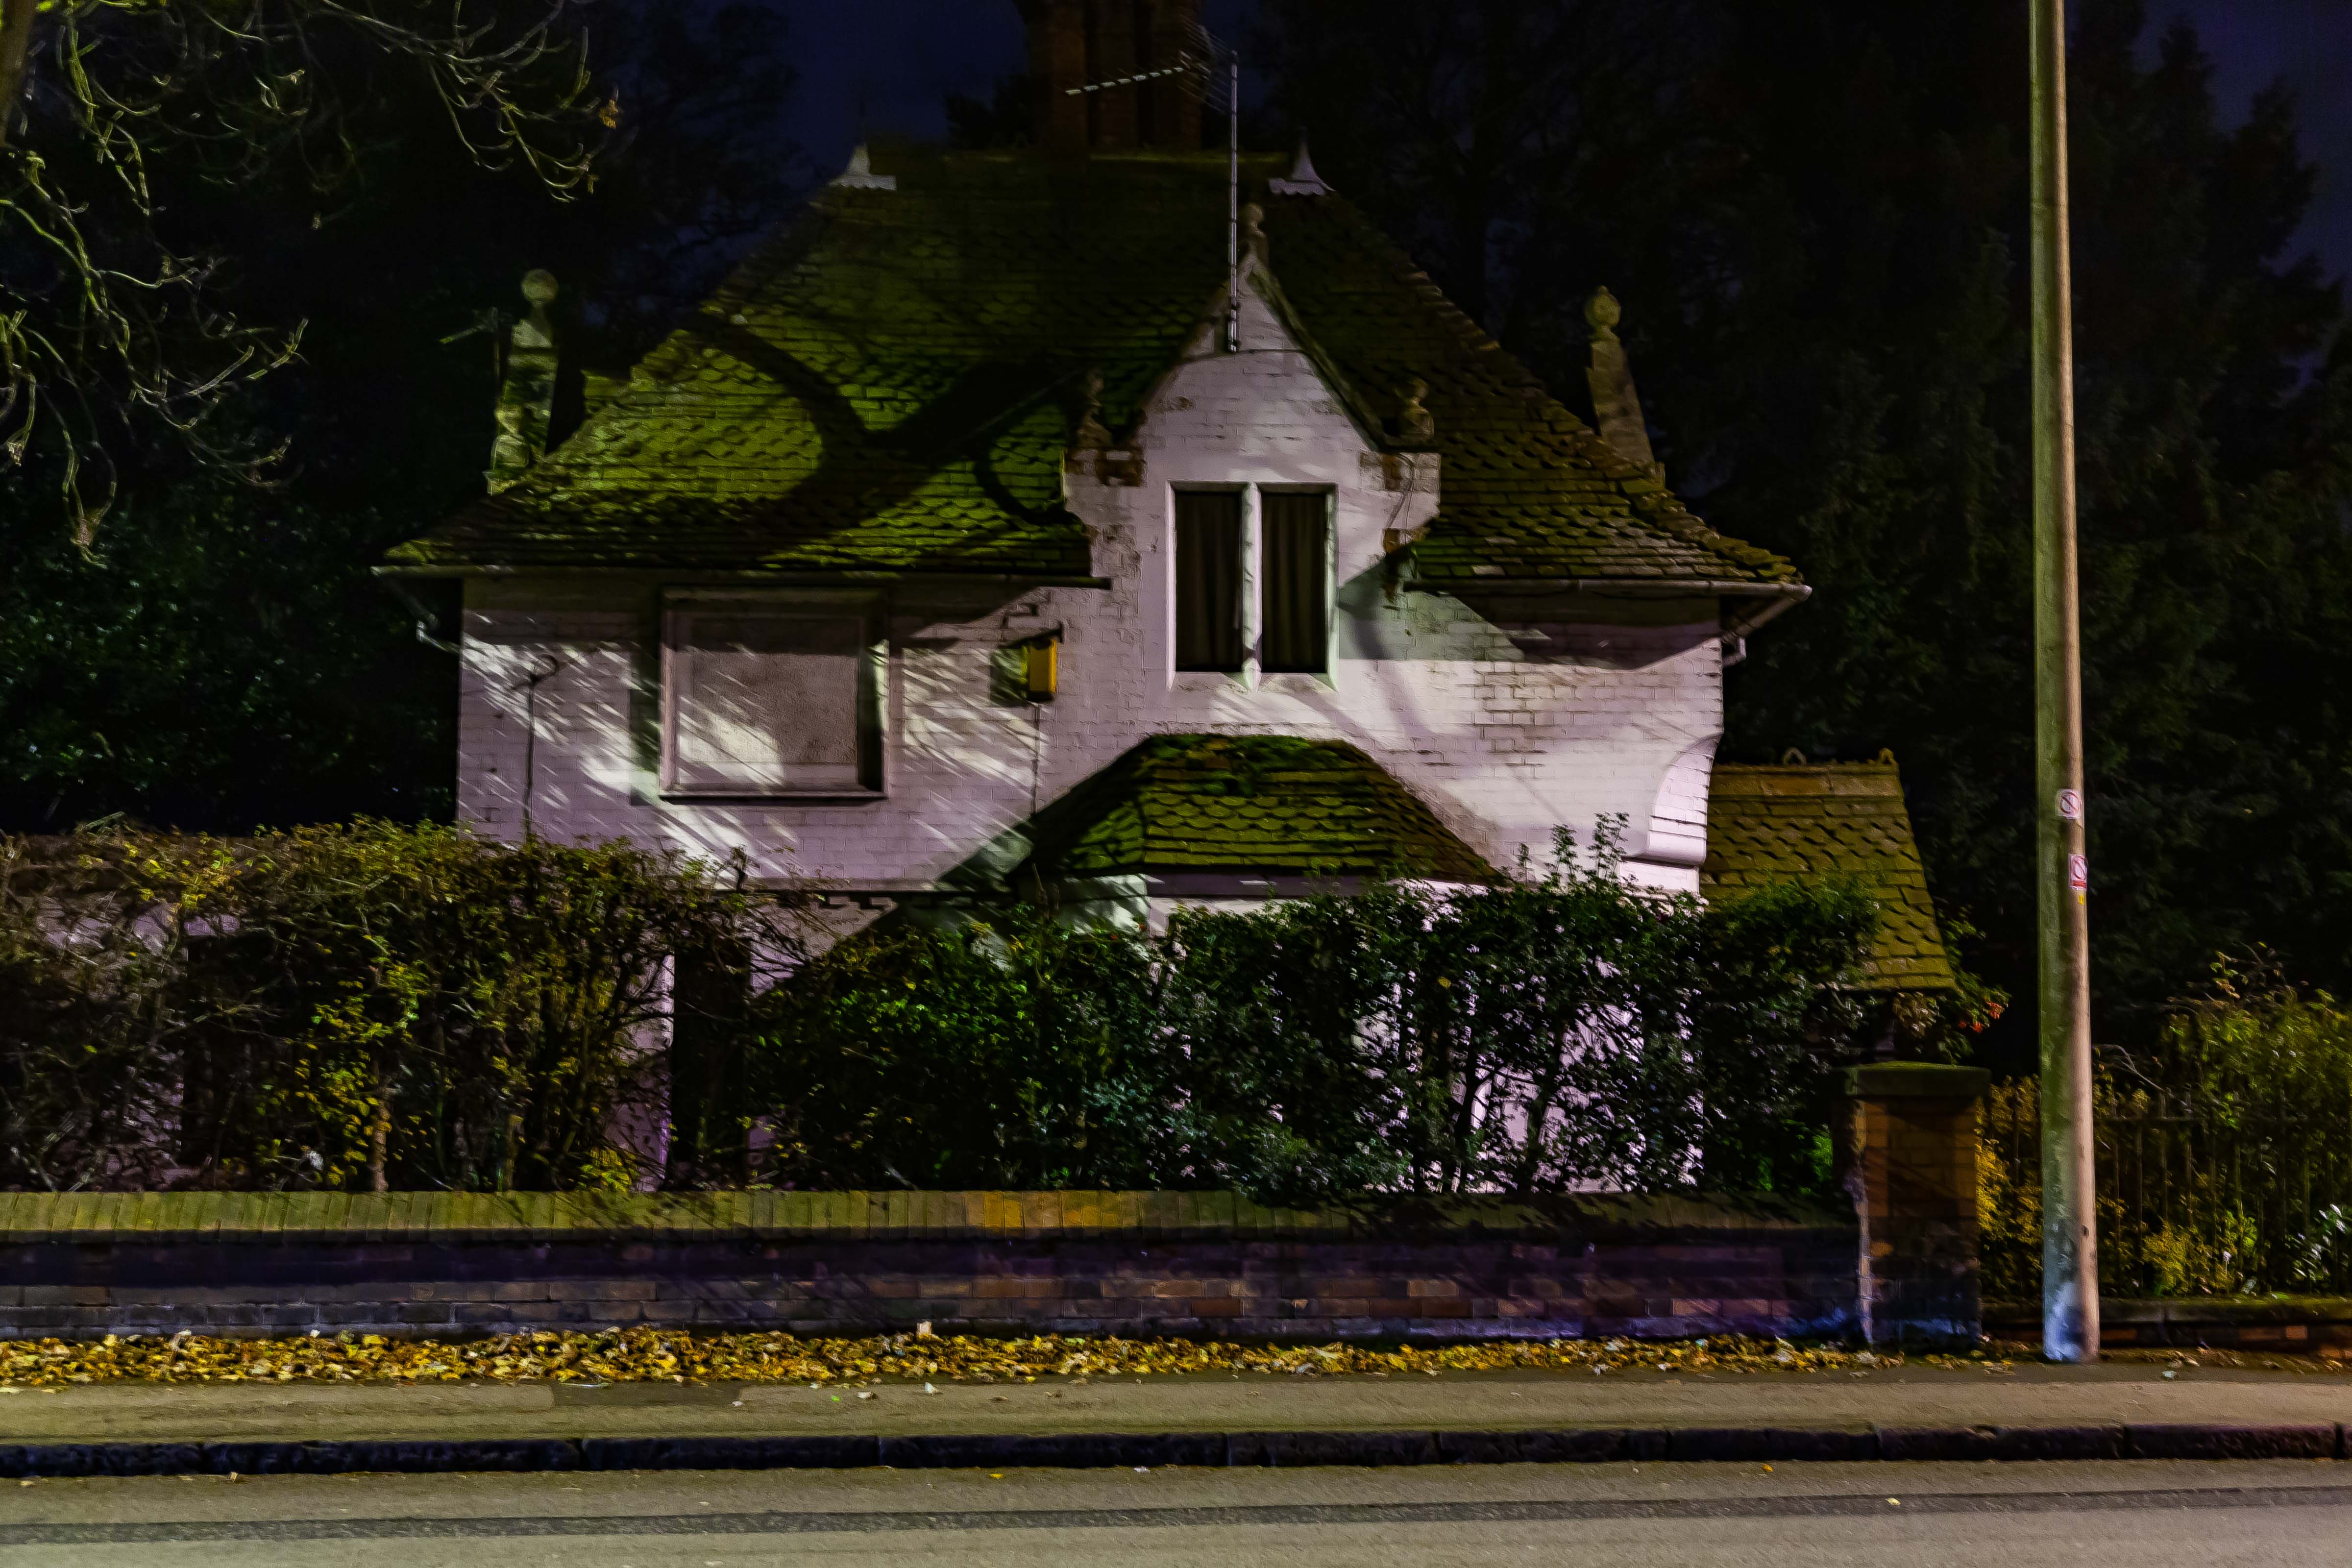 UK, Northhamptonshire Prov, Night House, 2009, IMG 7600